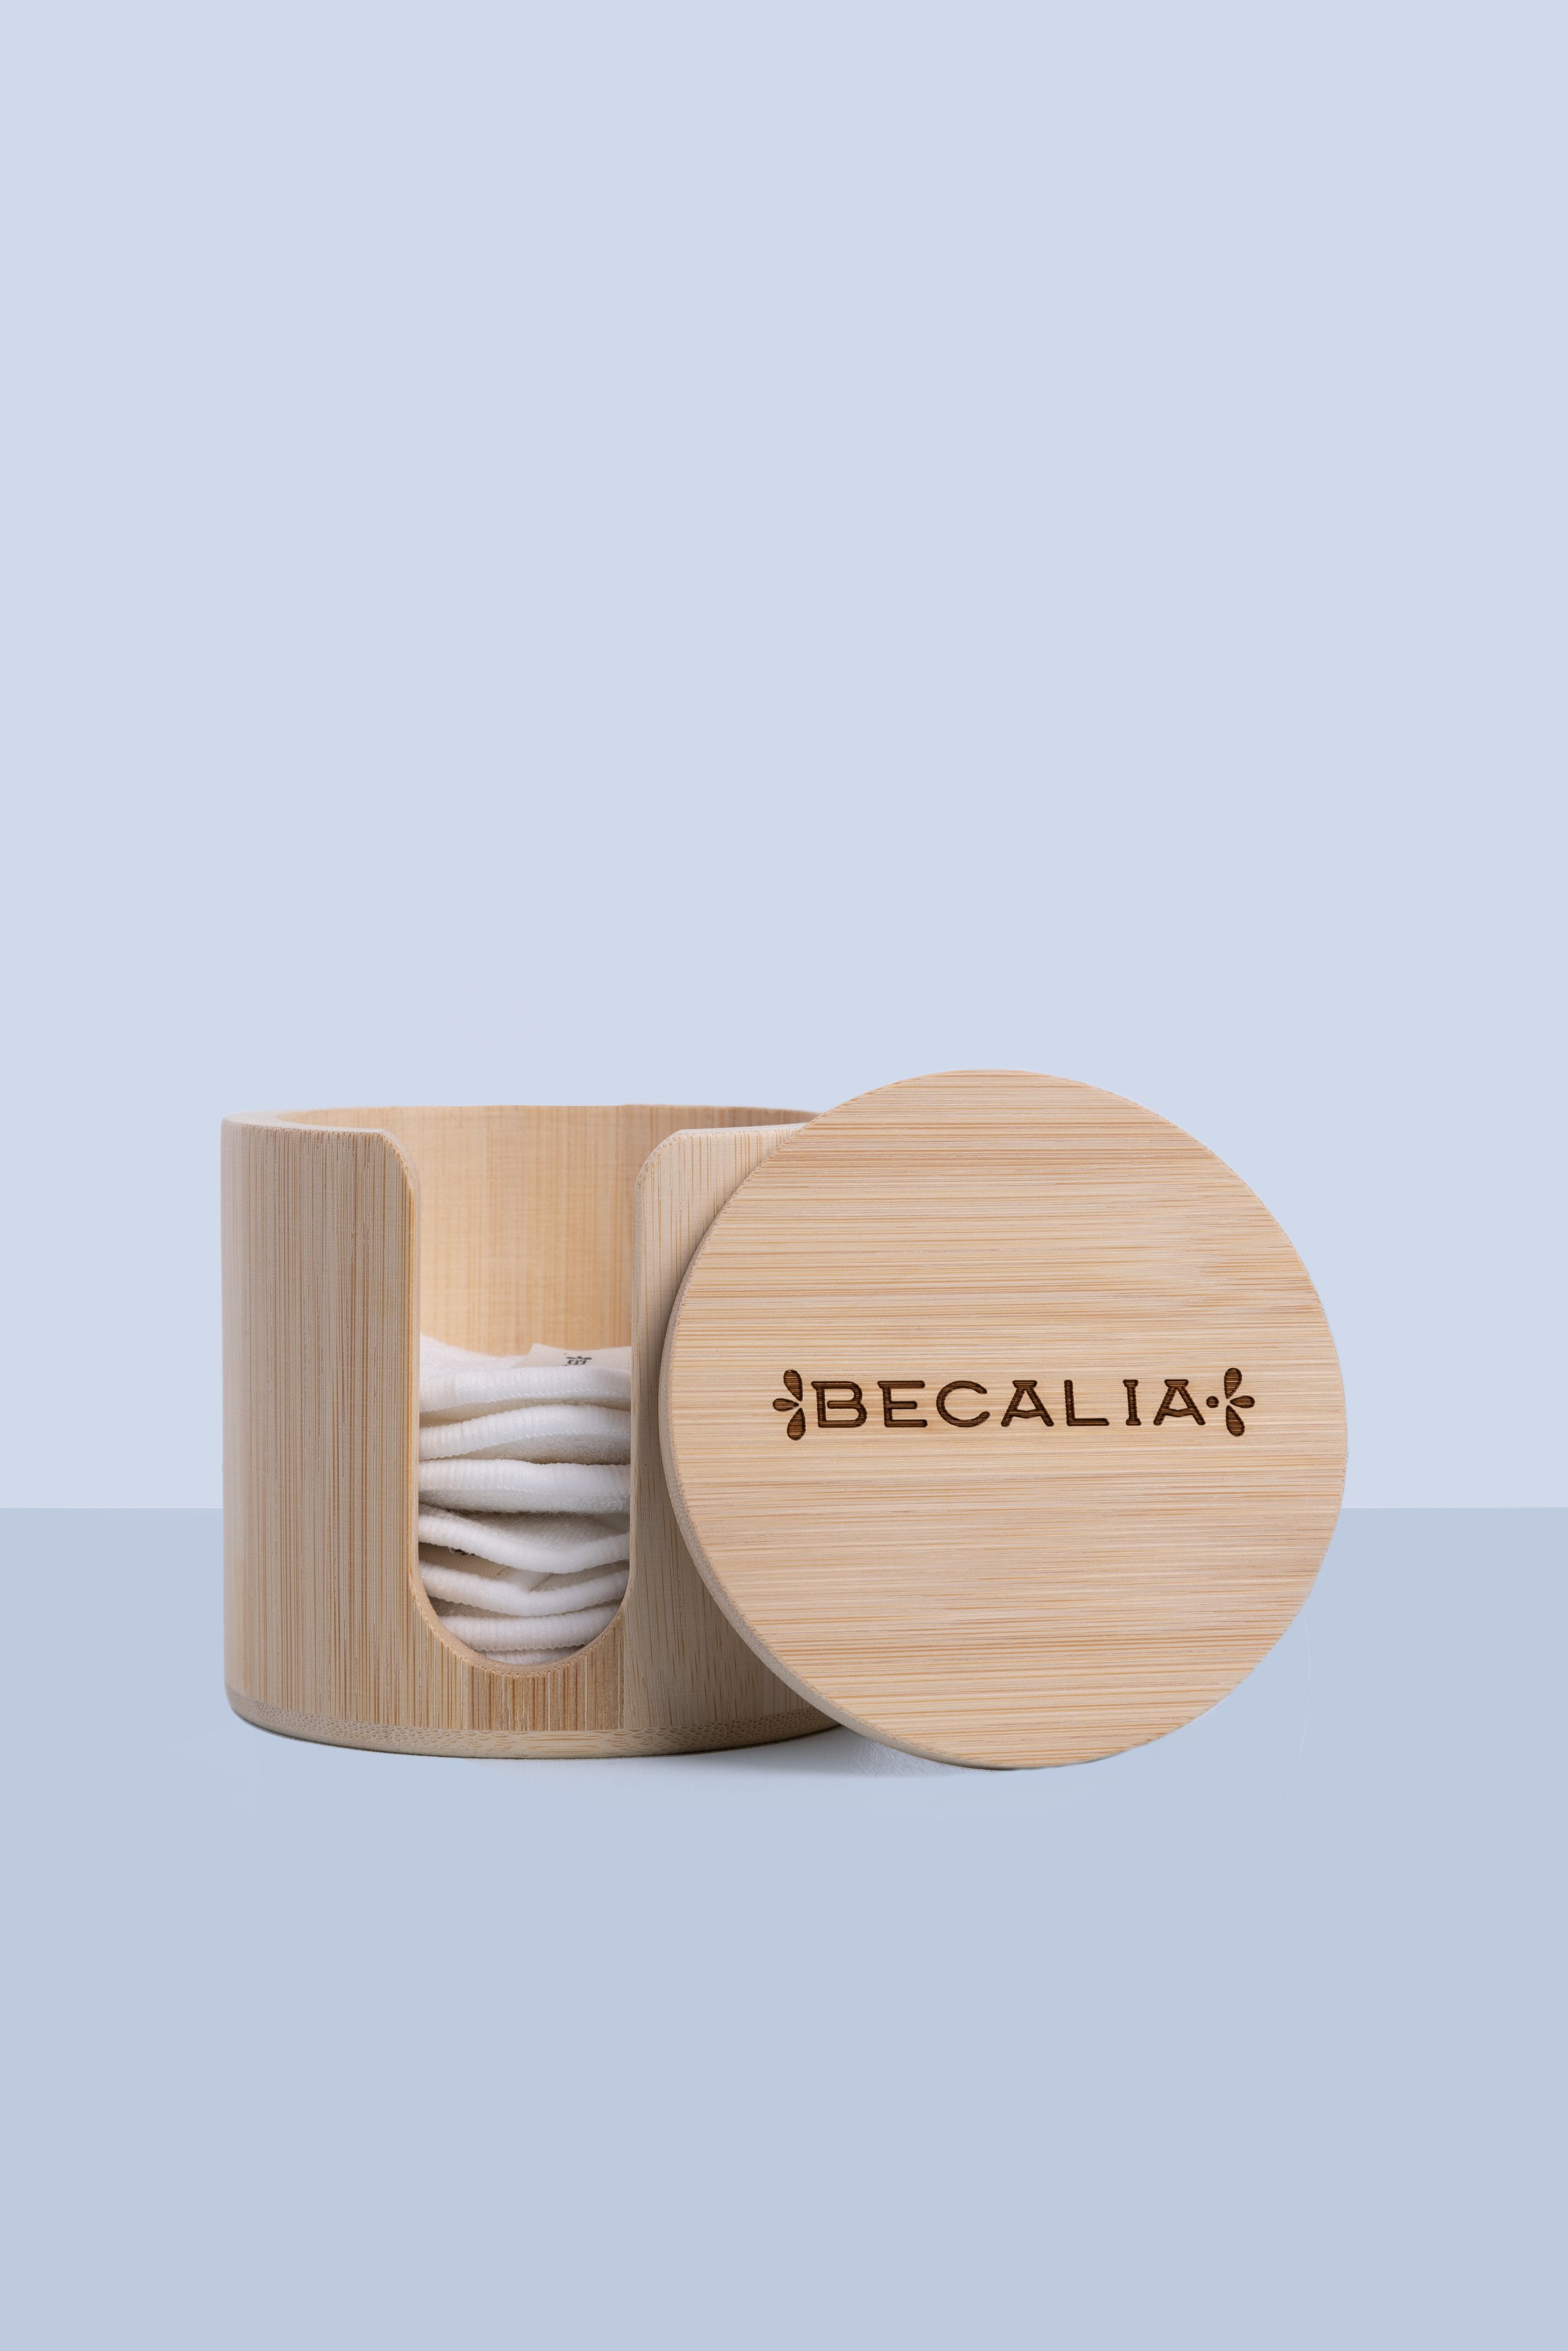 Becalia-Bamboo-Holder.jpg